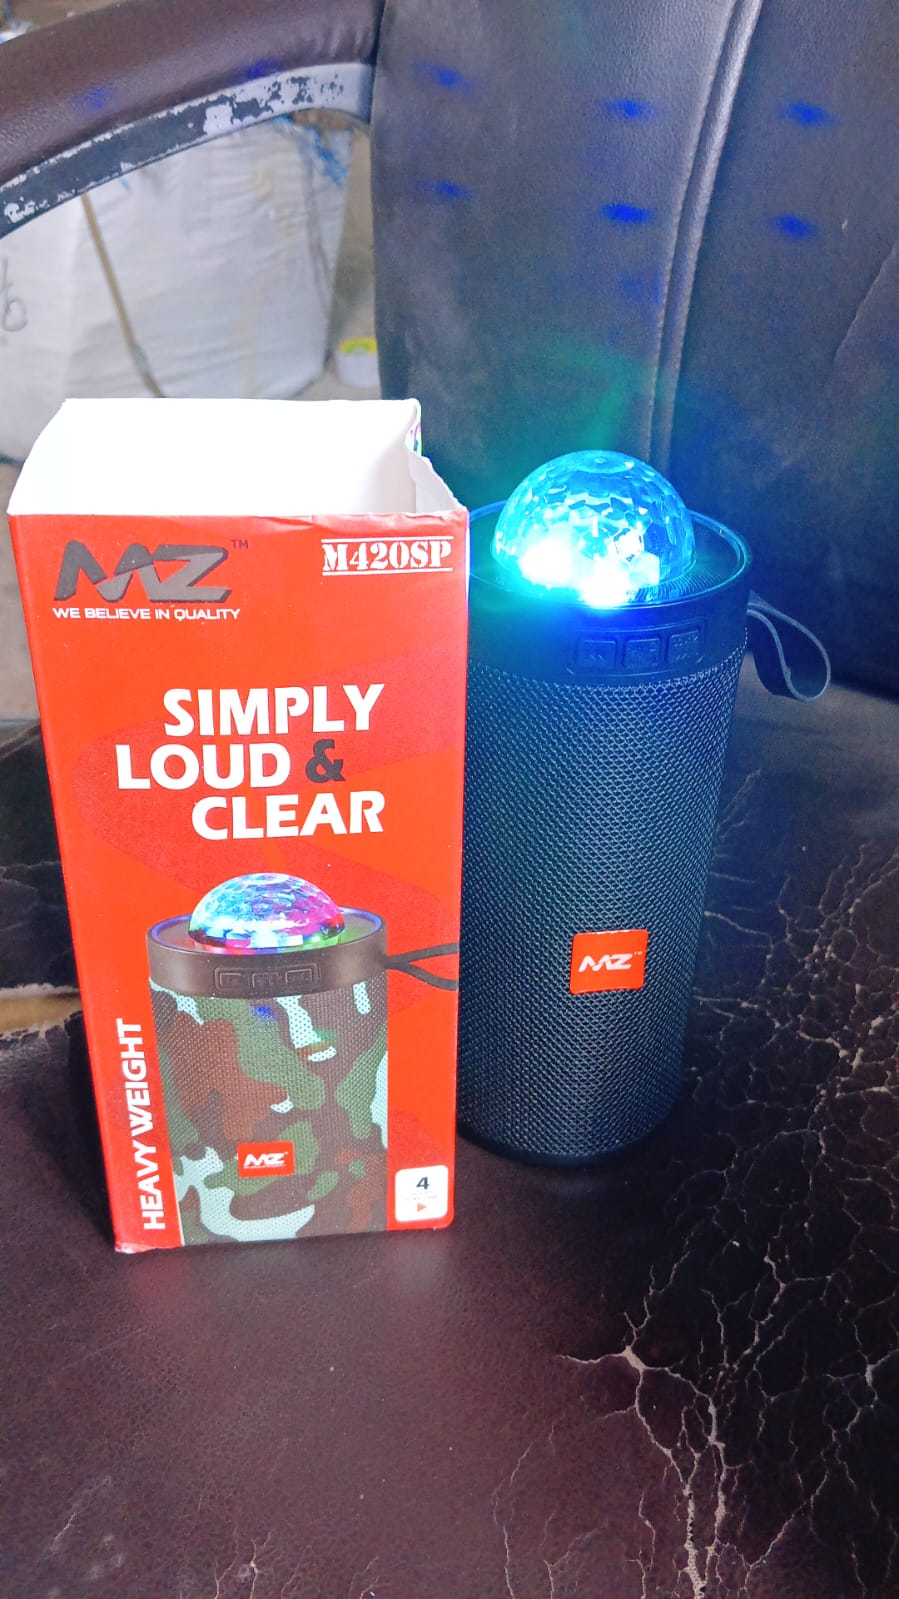 3D Disco Light Sound Bluetooth Speaker (1 Pc)